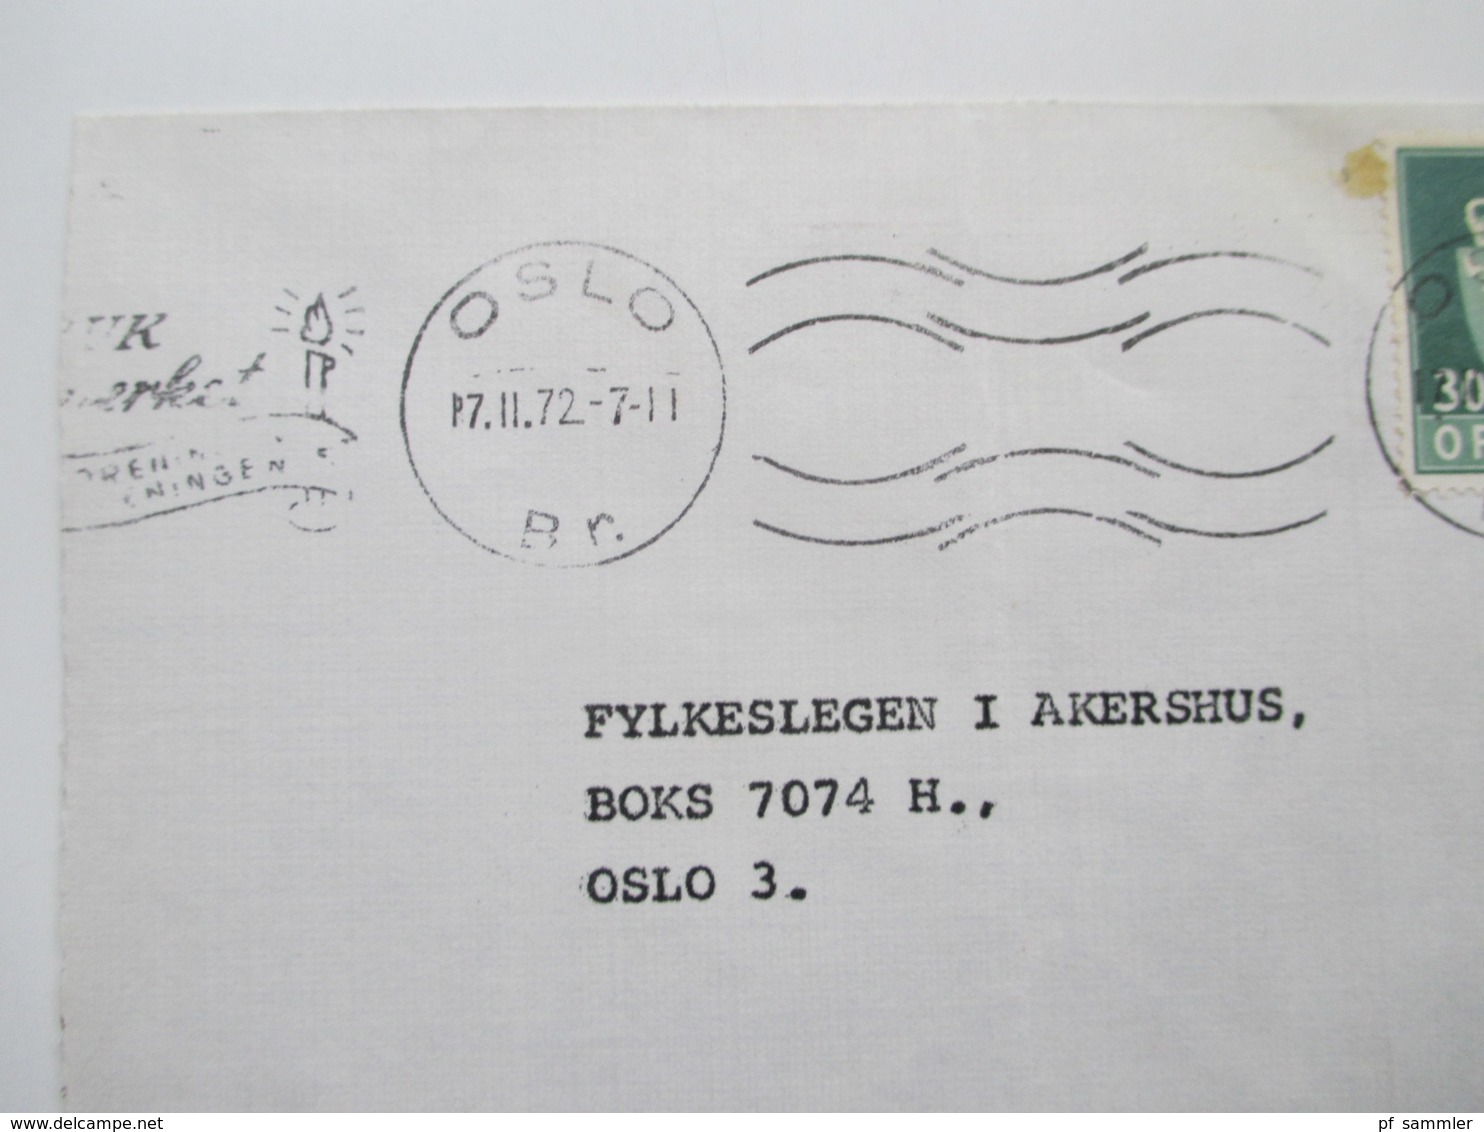 Norwegen 1972 Dienstmarken 5 Belege Inspektoren for Skoletannrokta Akershus. Off. Sak